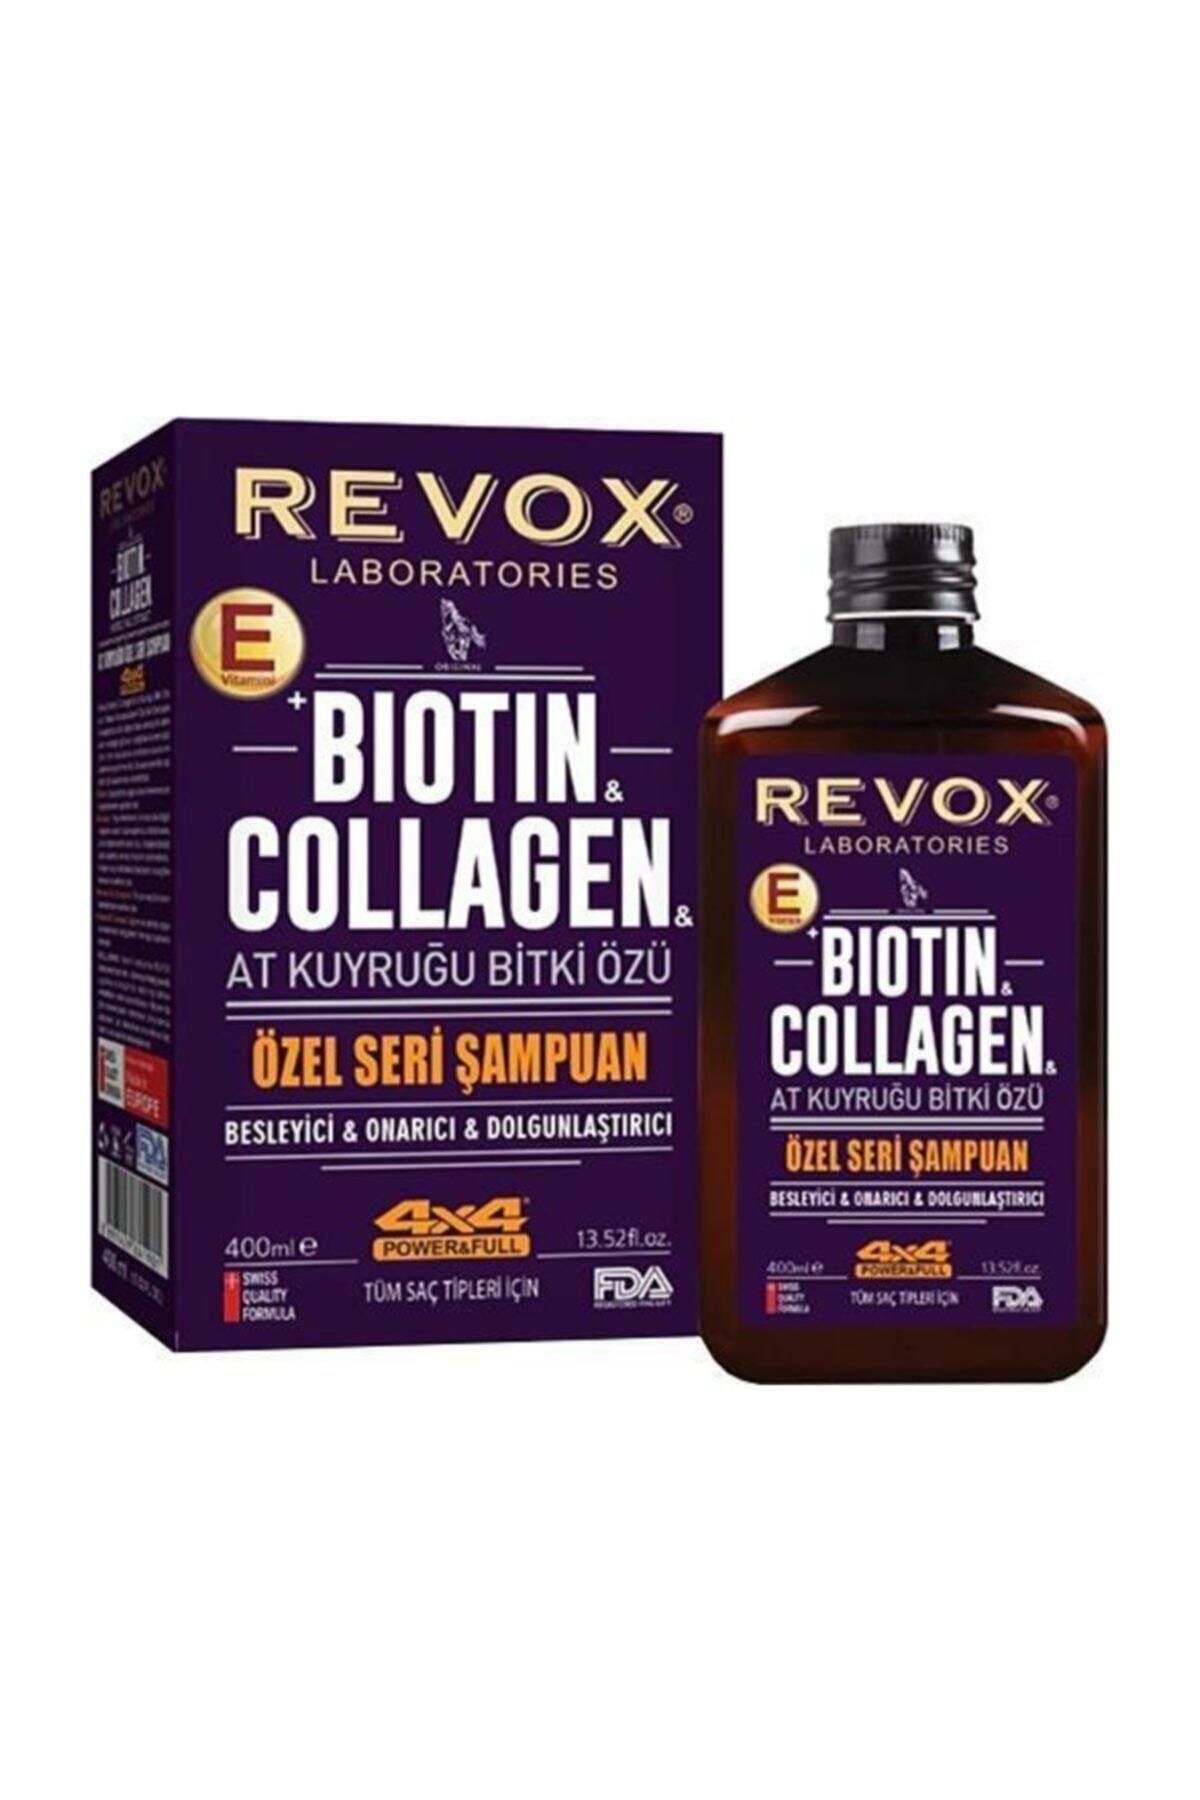 Revox At Kuyruğu Bitki Özü Biotin Collagen Özel Seri Şampuan 400 Ml